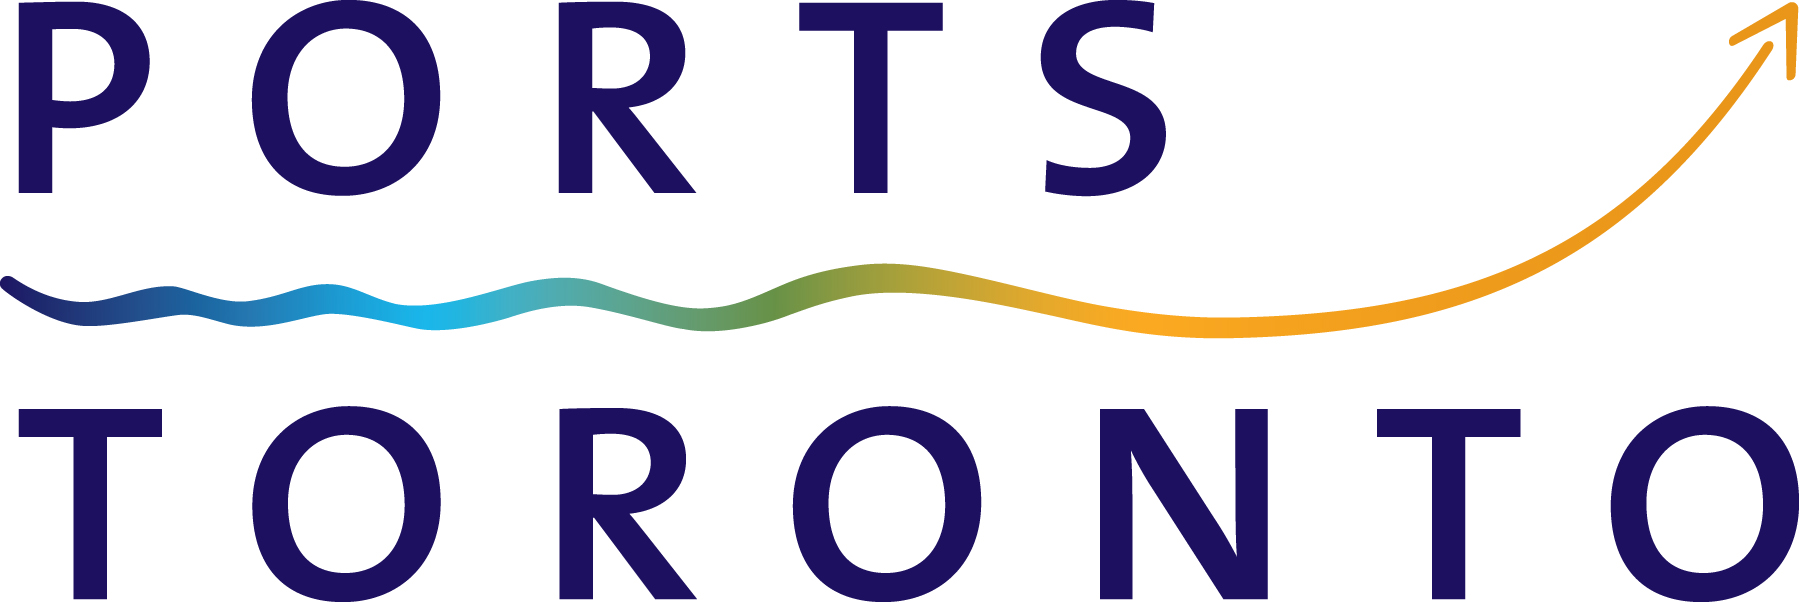 Logo de l’organisation PortsToronto 